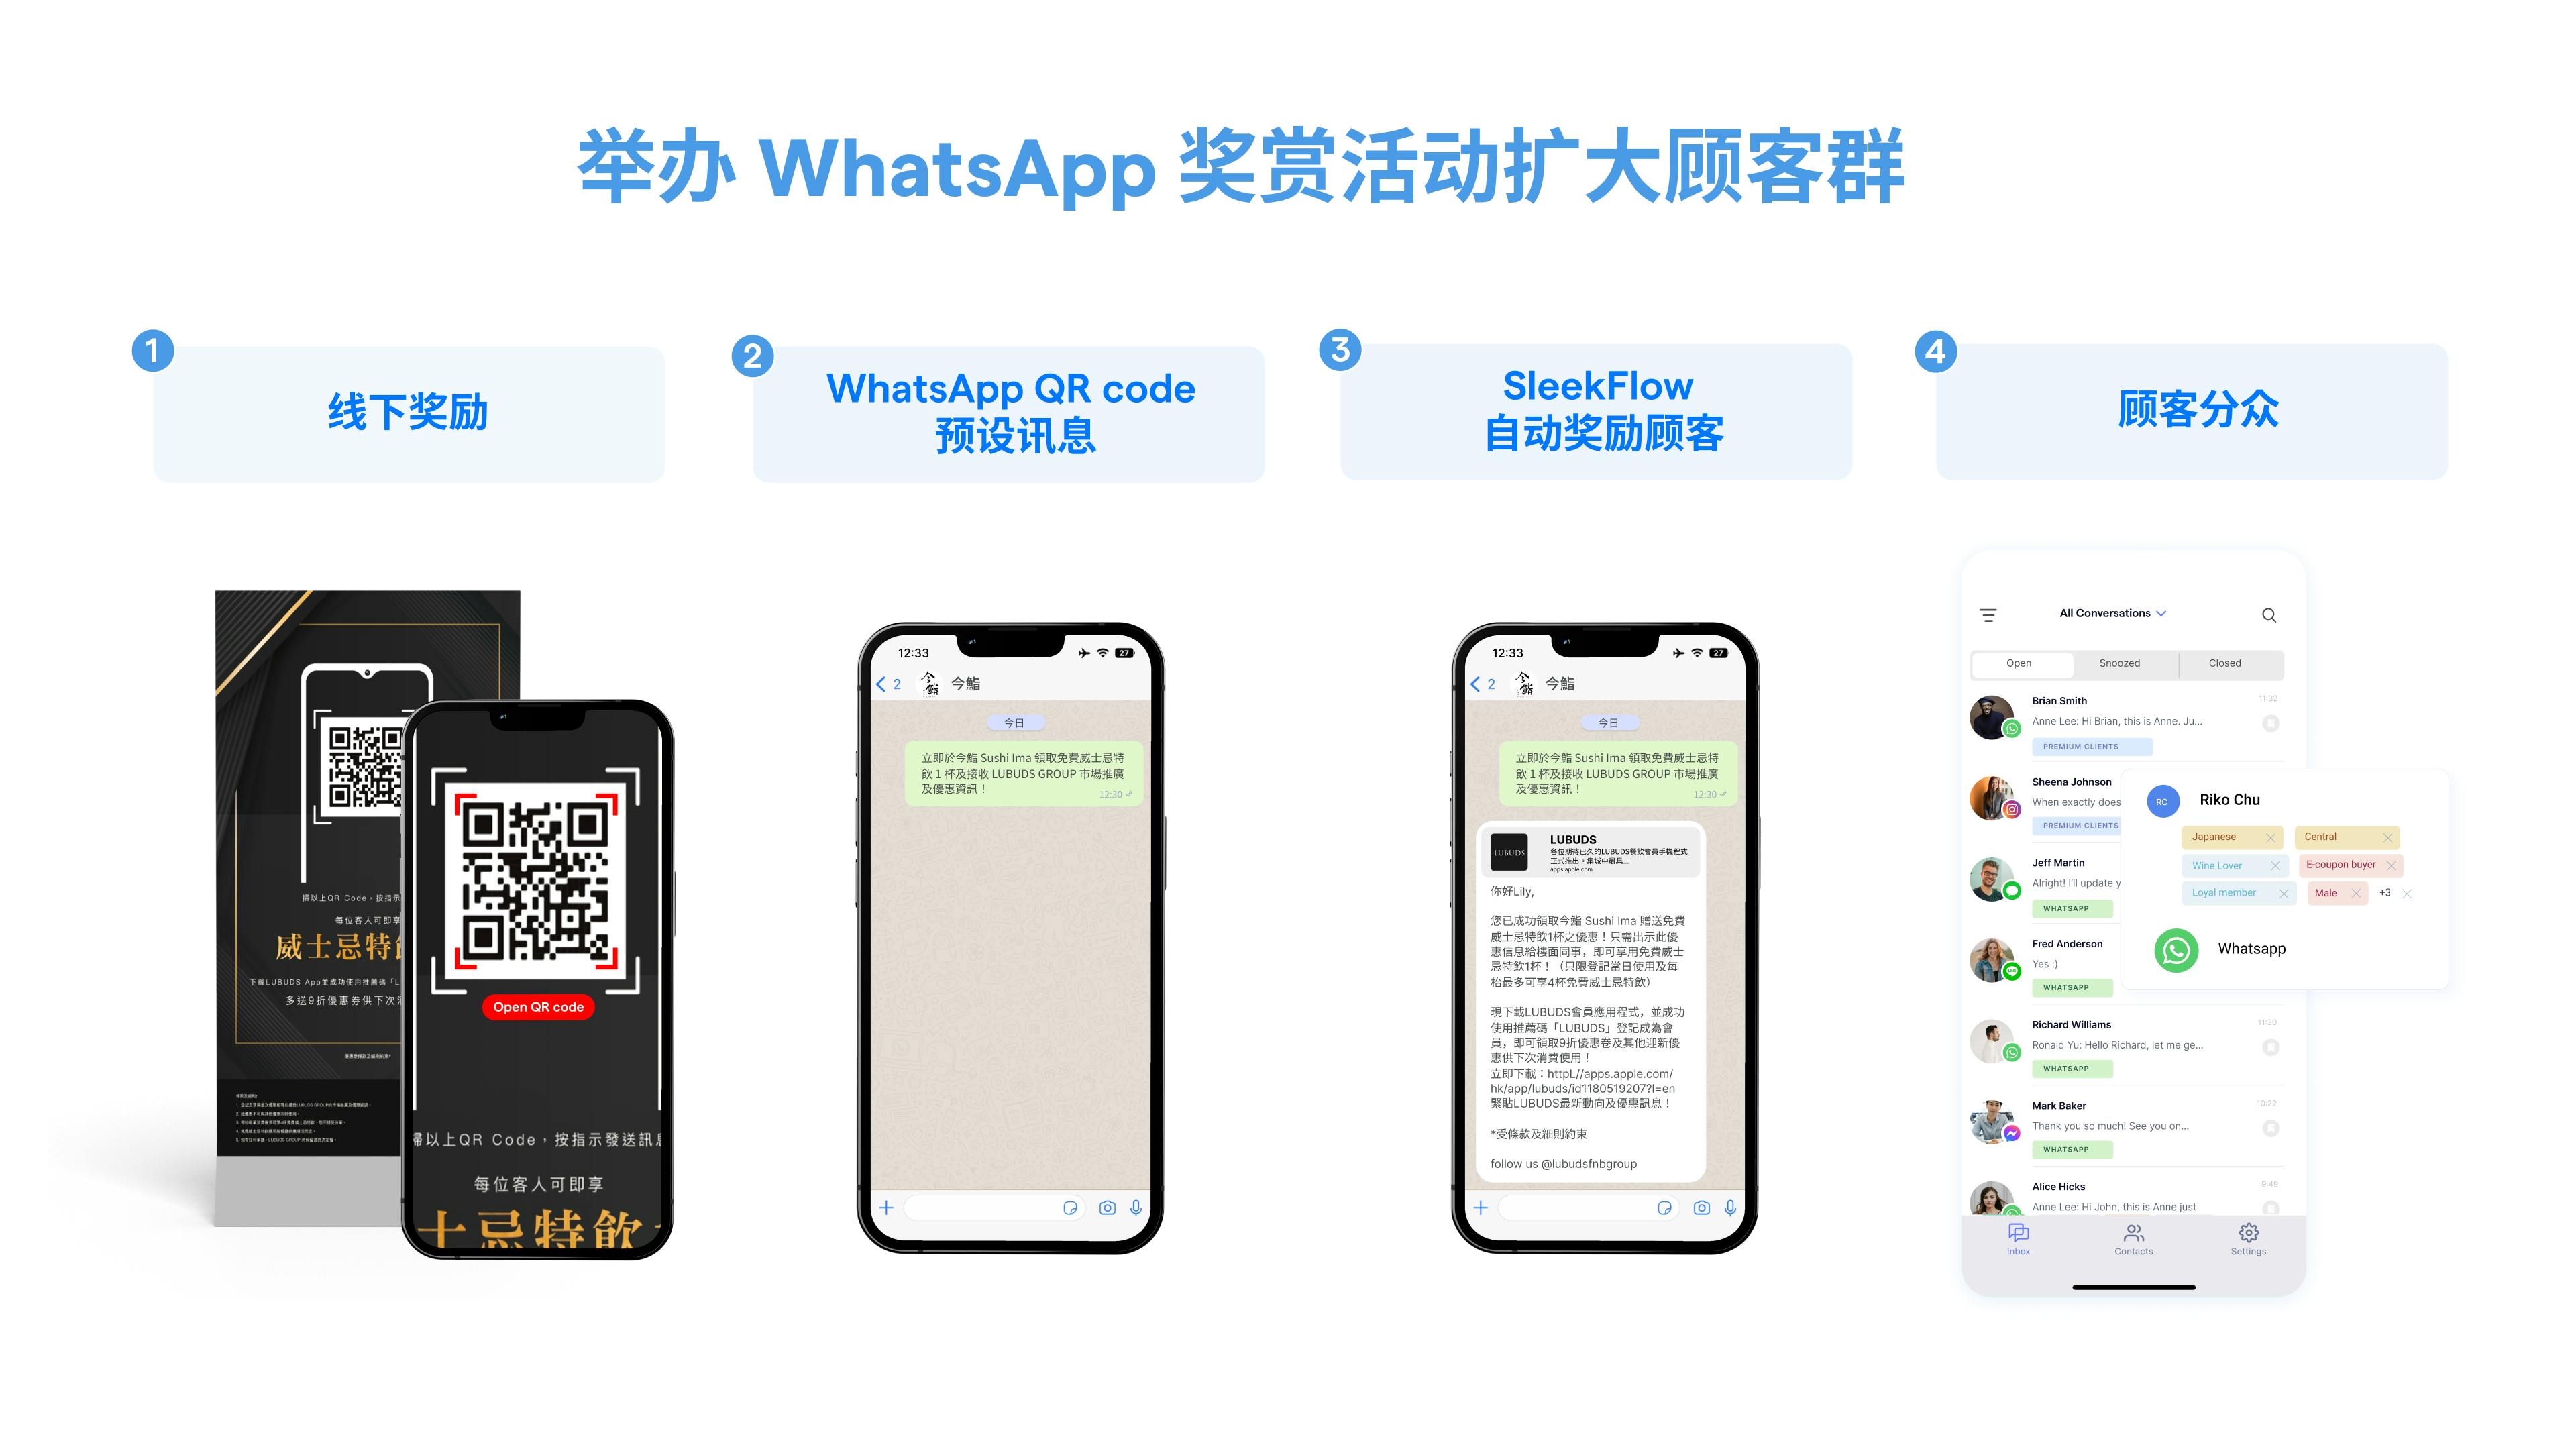 LUBUDS Group 举办 WhatsApp 营销活动